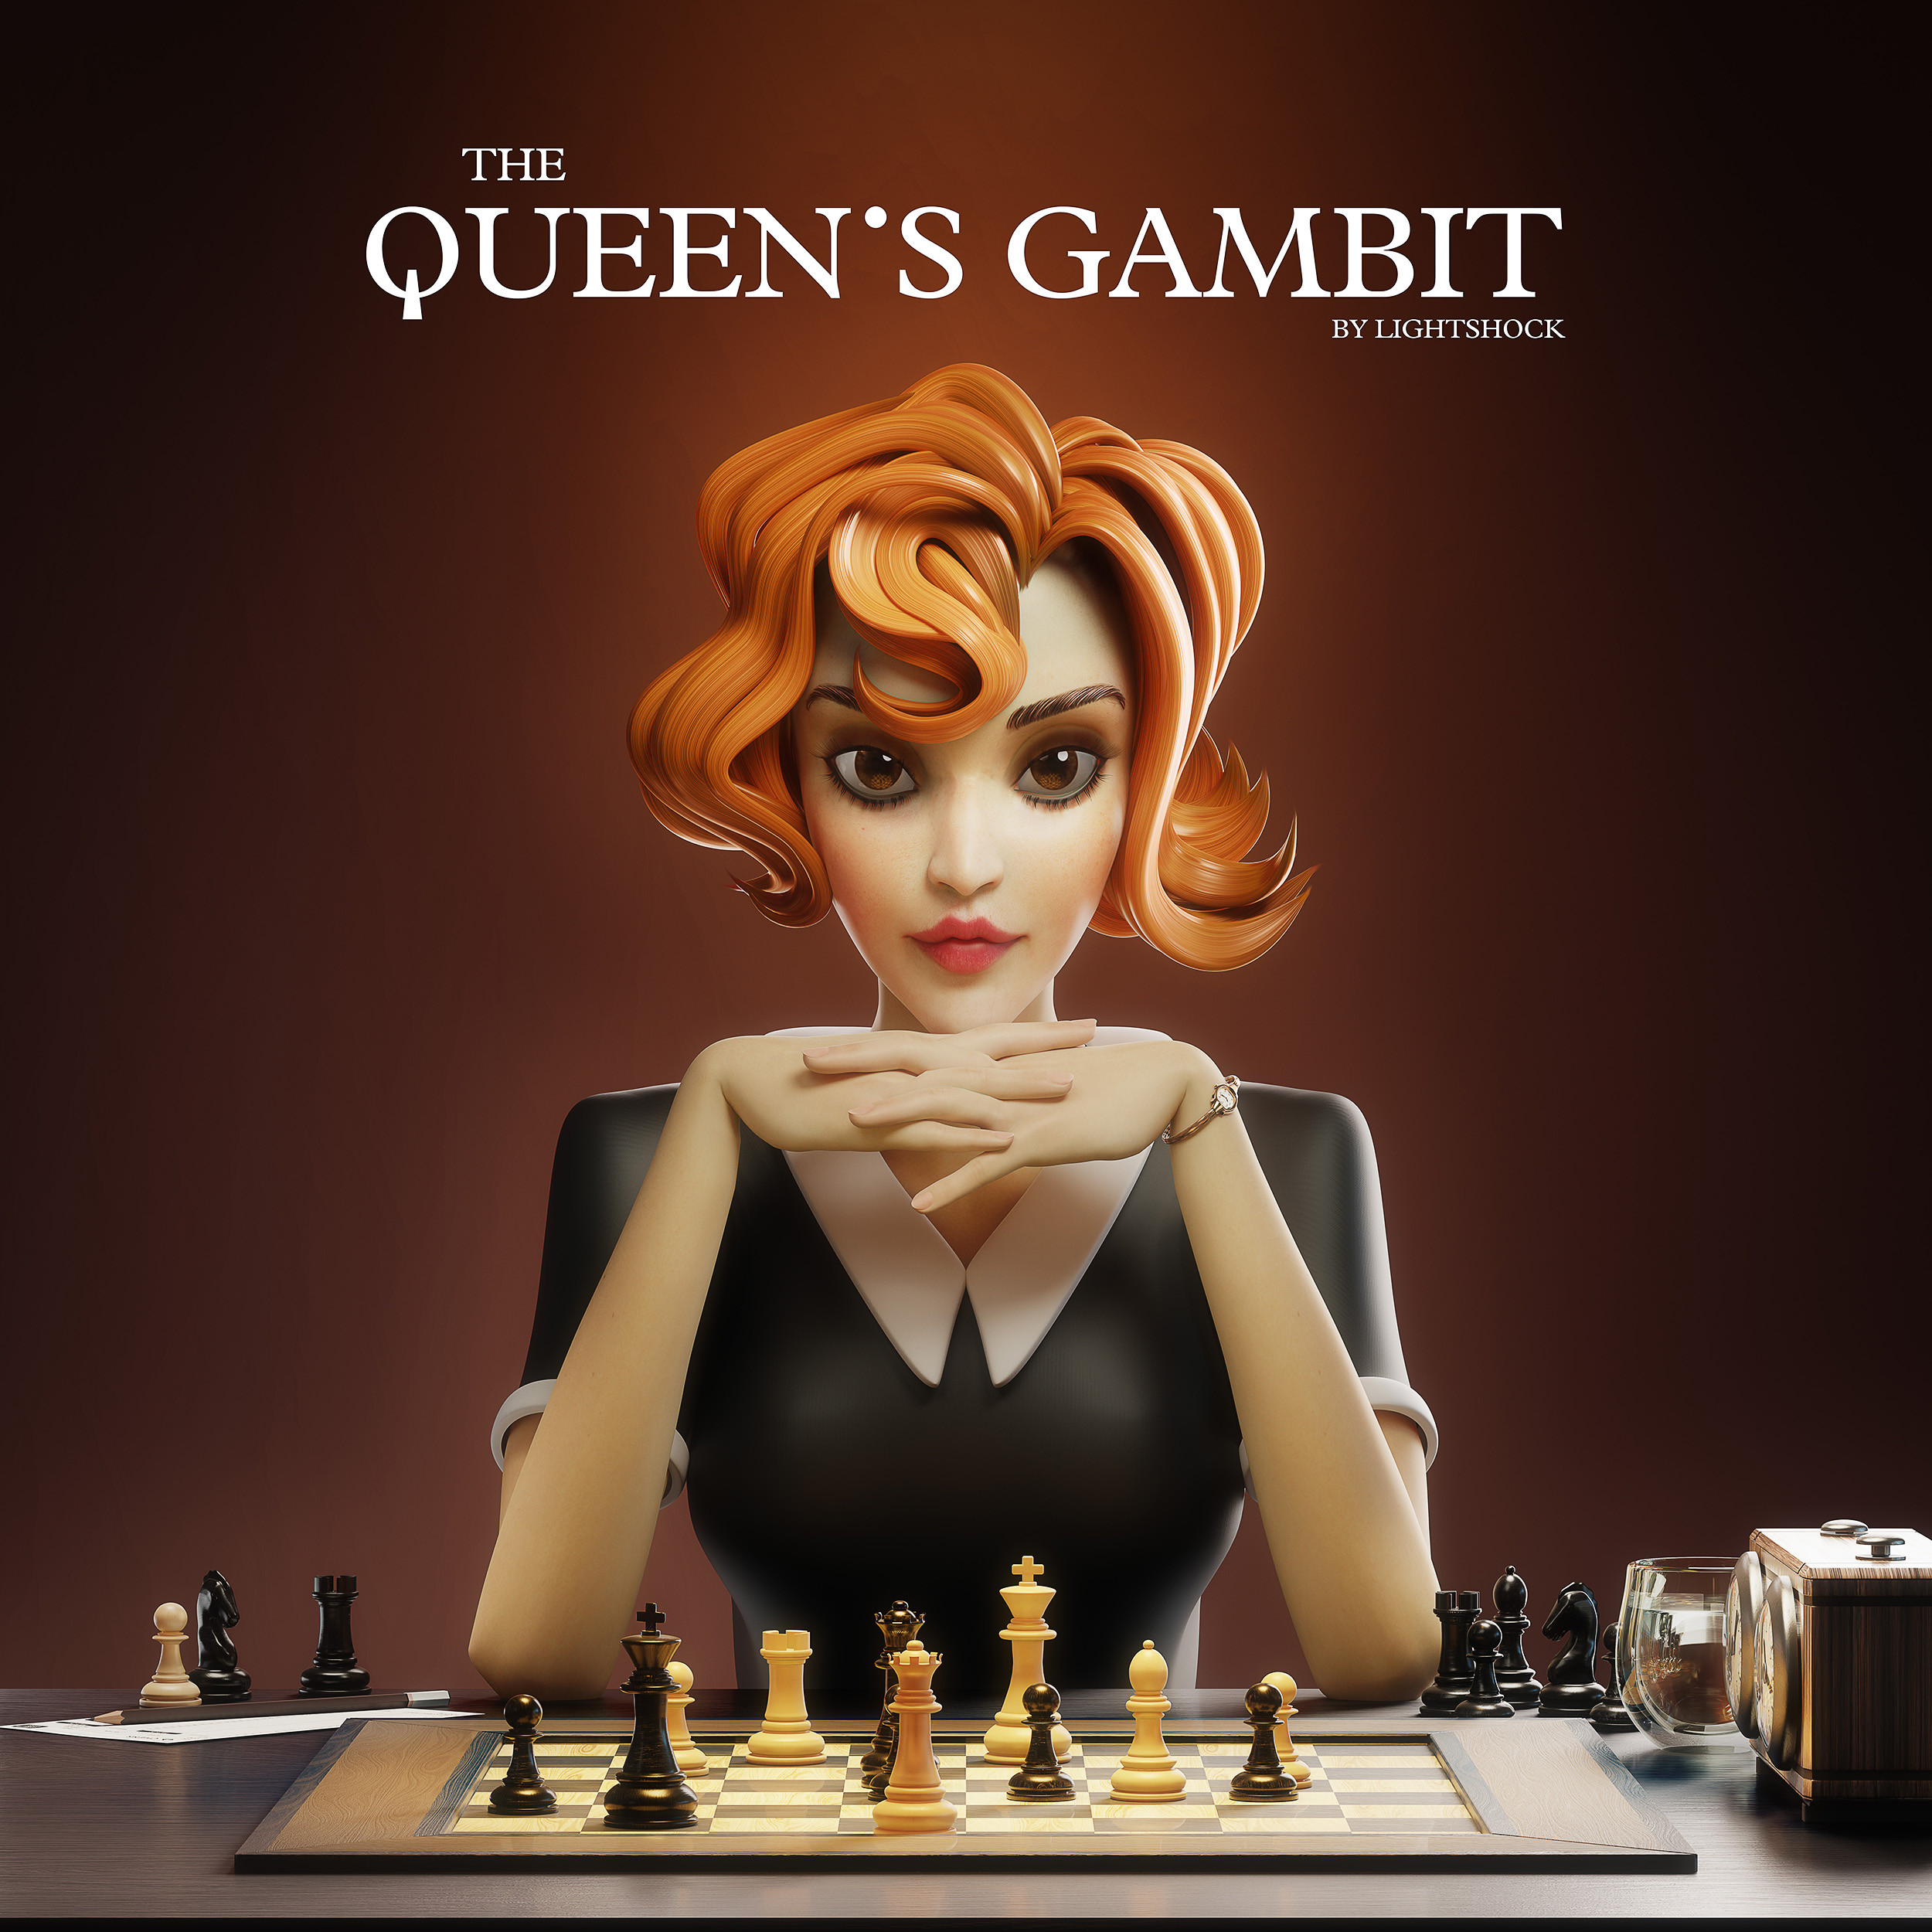 Queen's Gambit Images – Browse 143 Stock Photos, Vectors, and Video